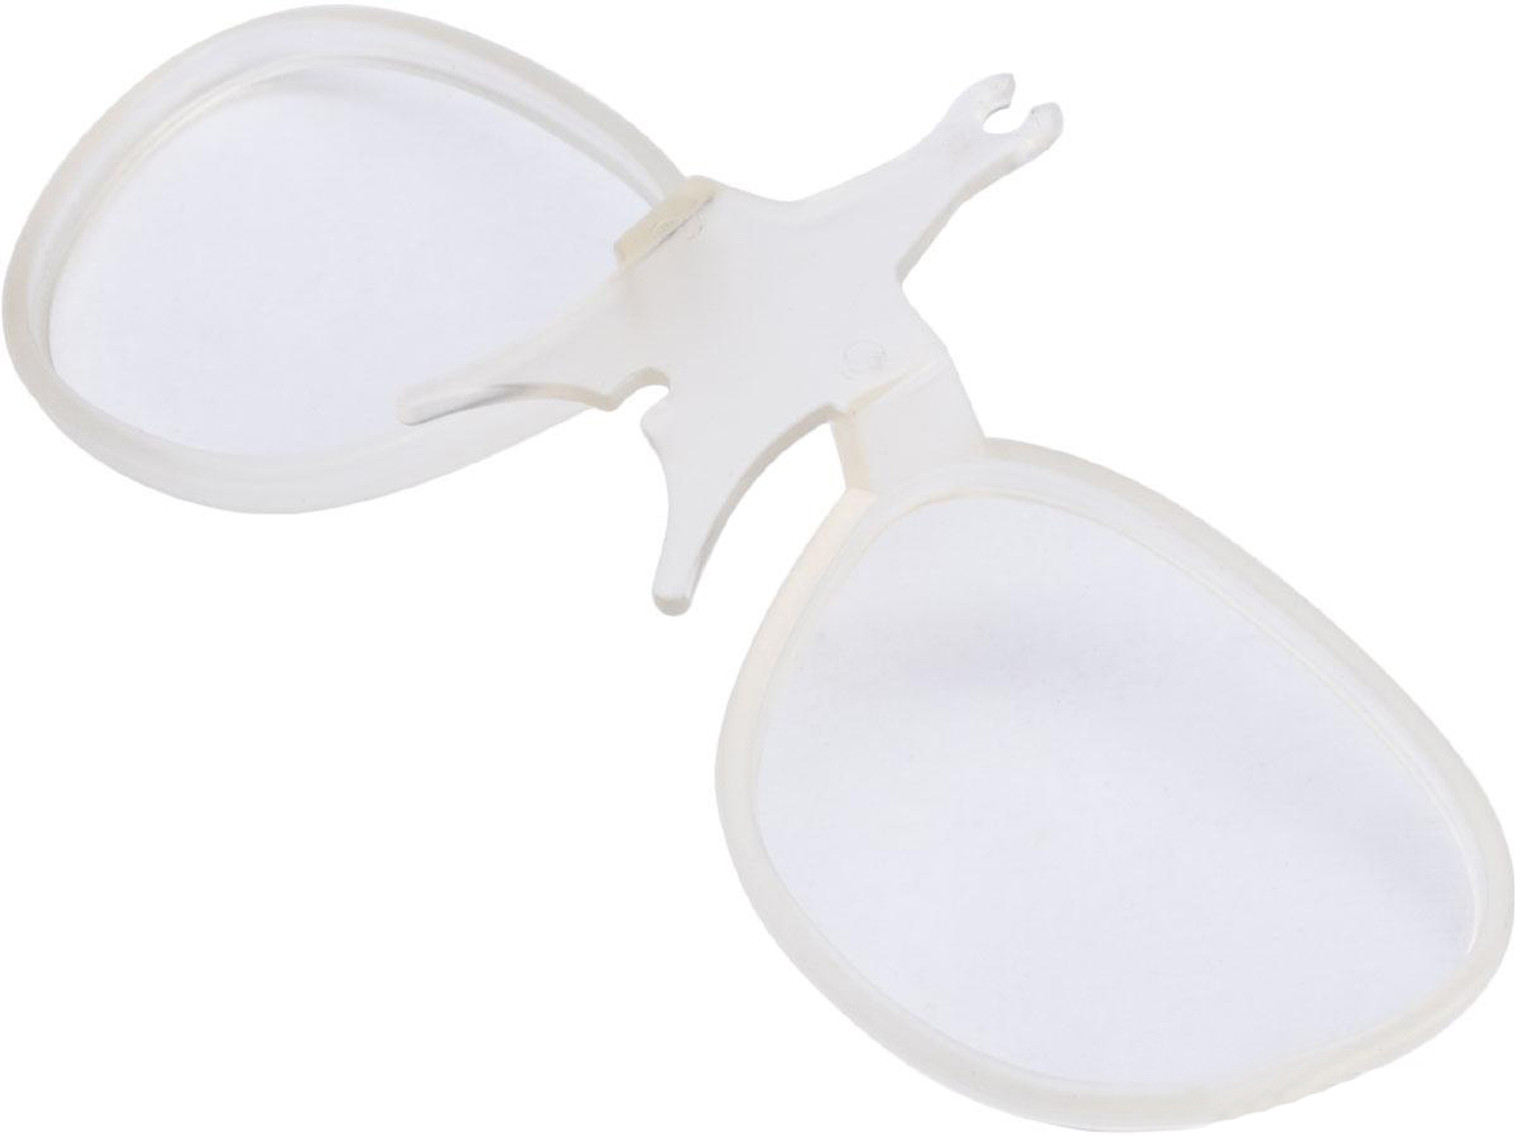 Global Vision RX Adaptor for Ballistech 3 A/F Ballistic Goggles